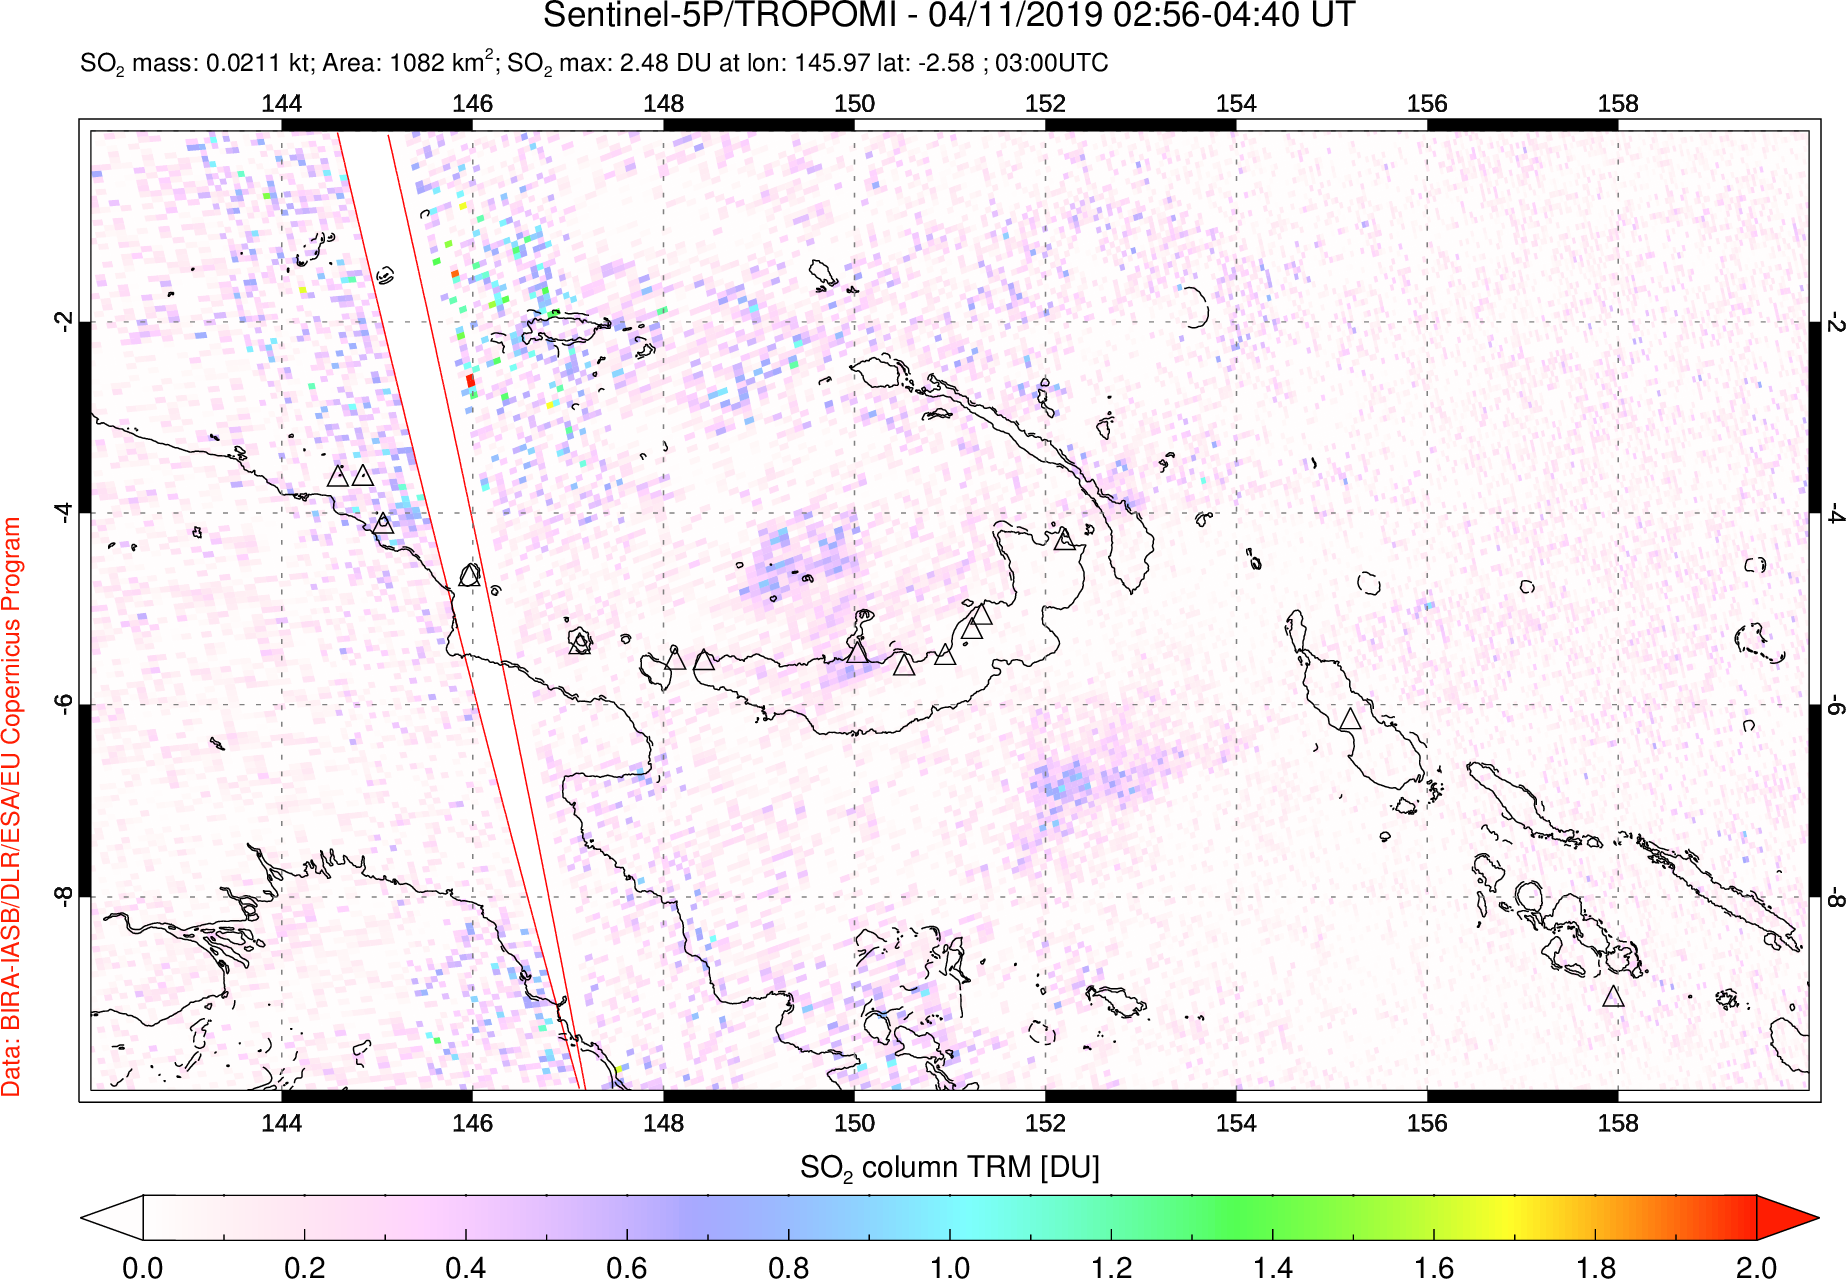 A sulfur dioxide image over Papua, New Guinea on Apr 11, 2019.